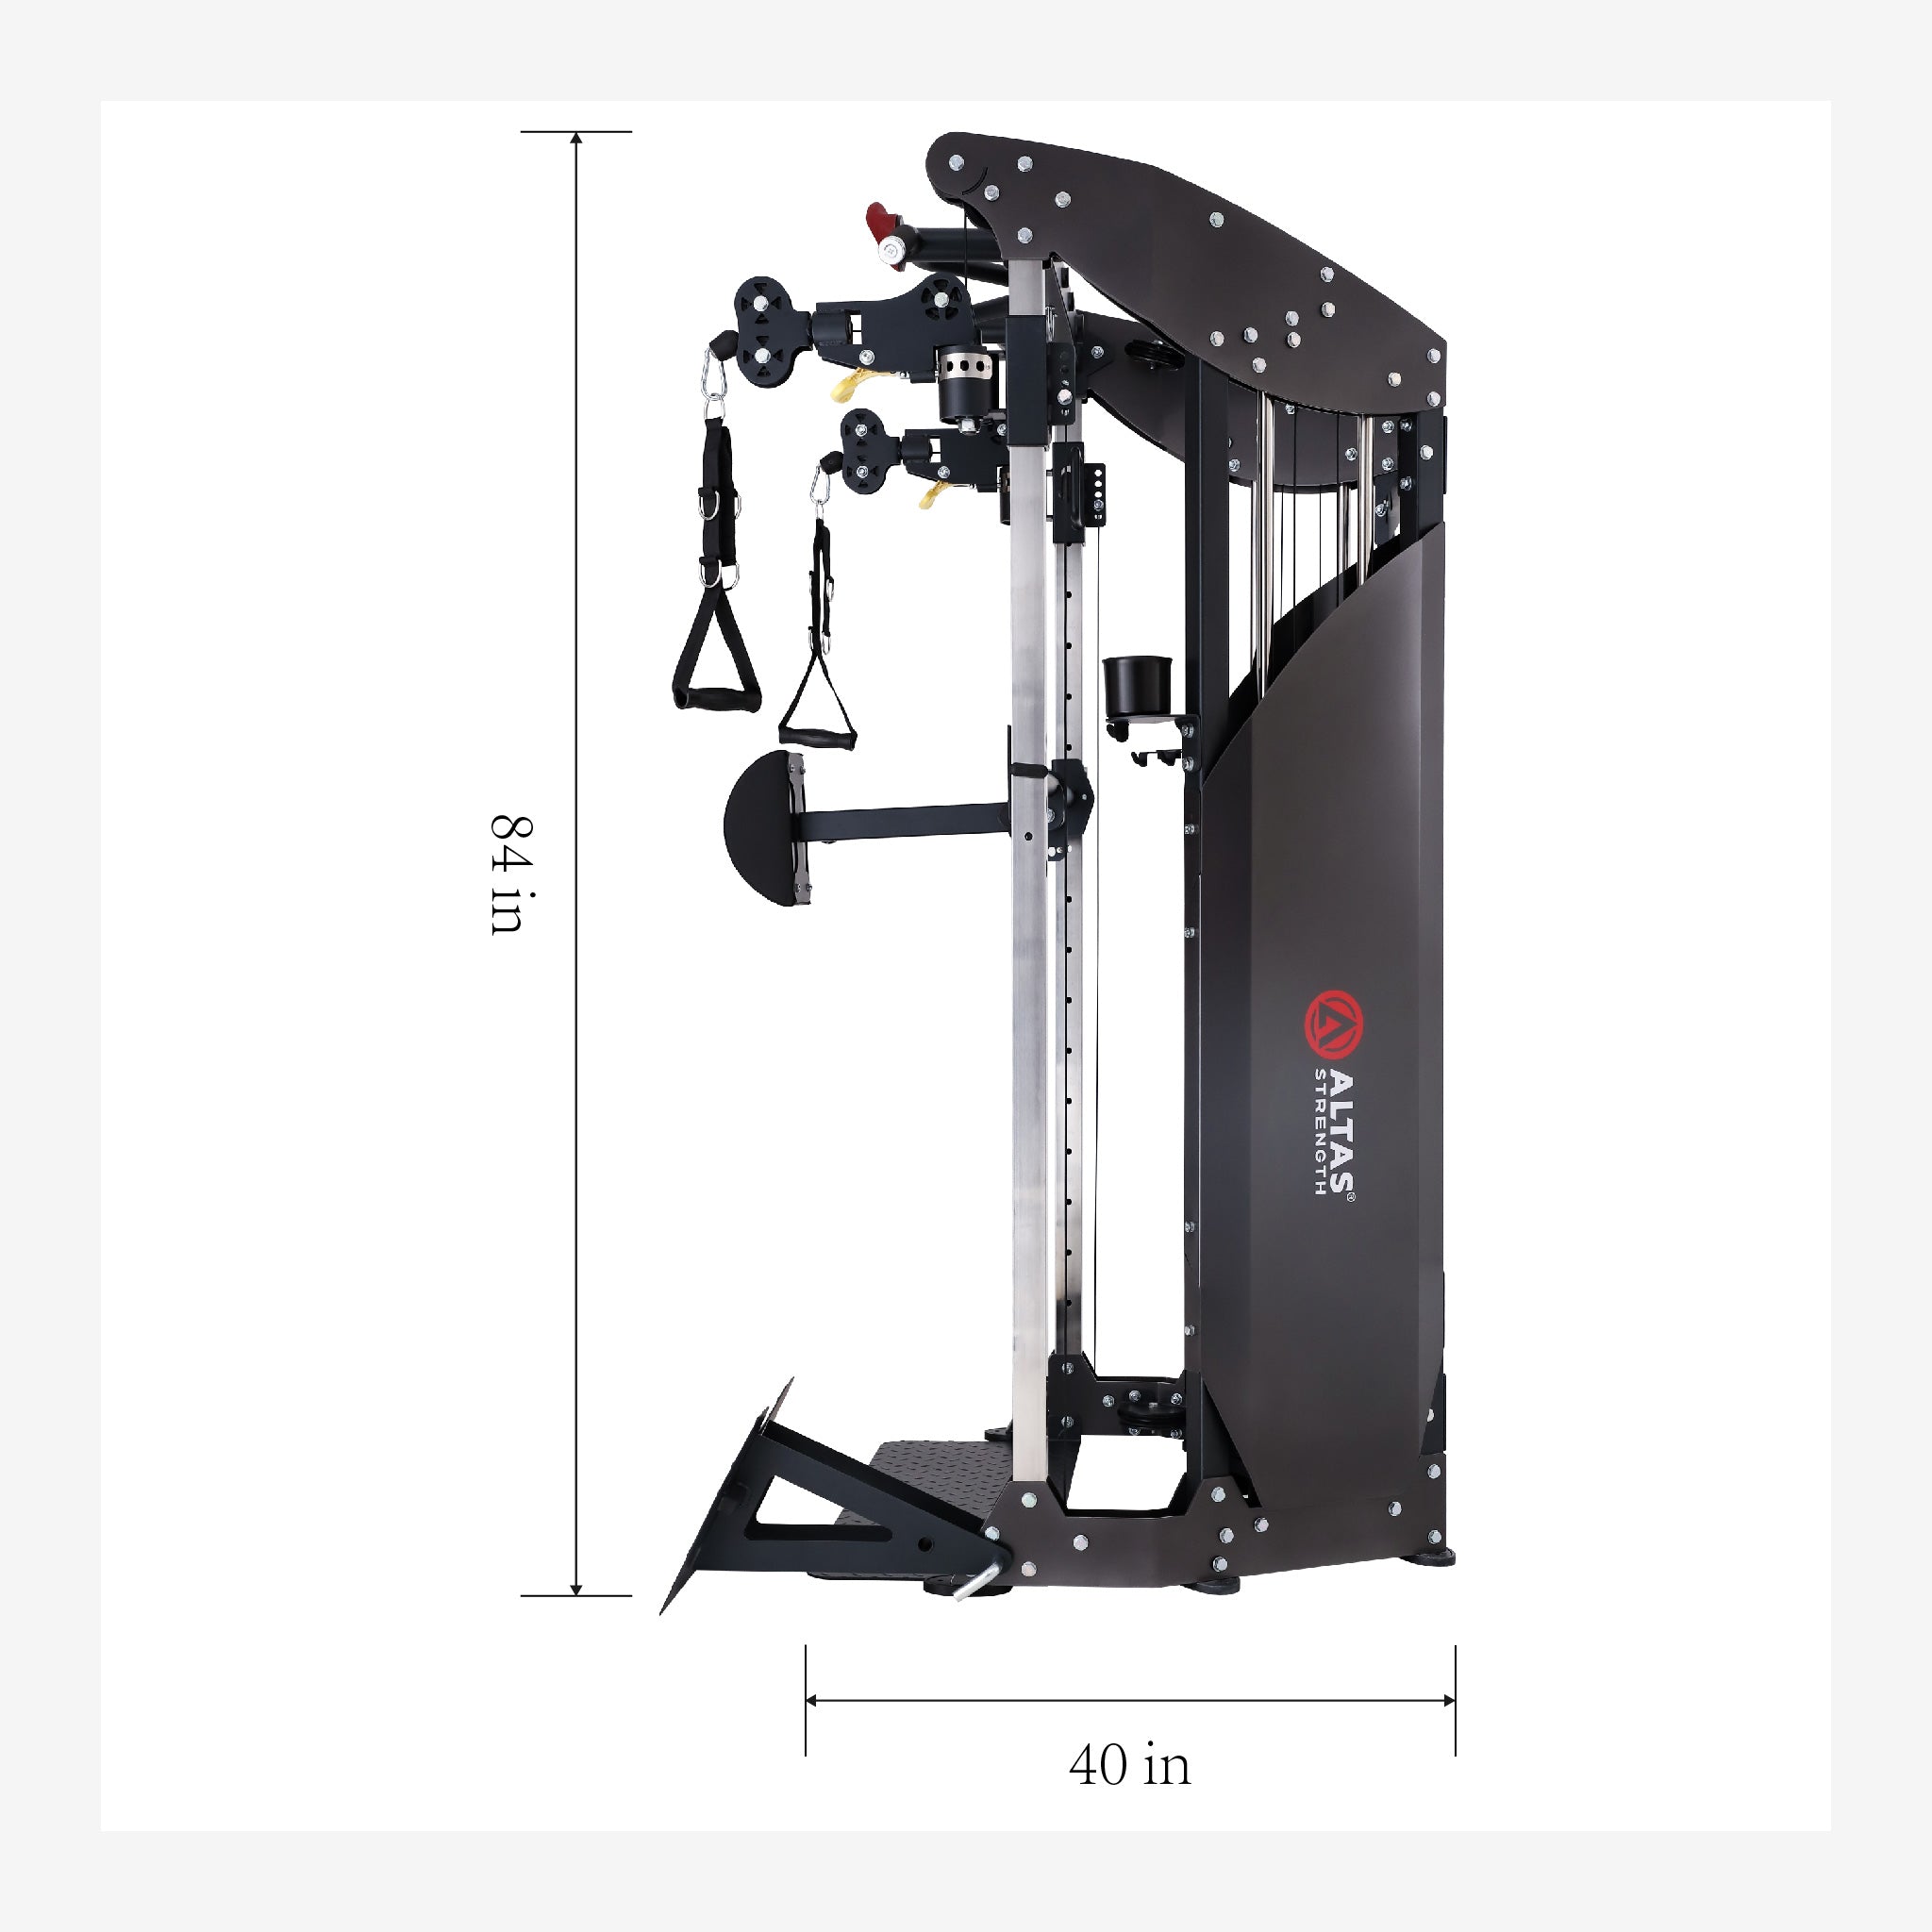 Altas Strength Multi Function Trainer Exercise Machine Black Workout Light Commercial Fitness Equipment AL-3075 (Pre-Order)